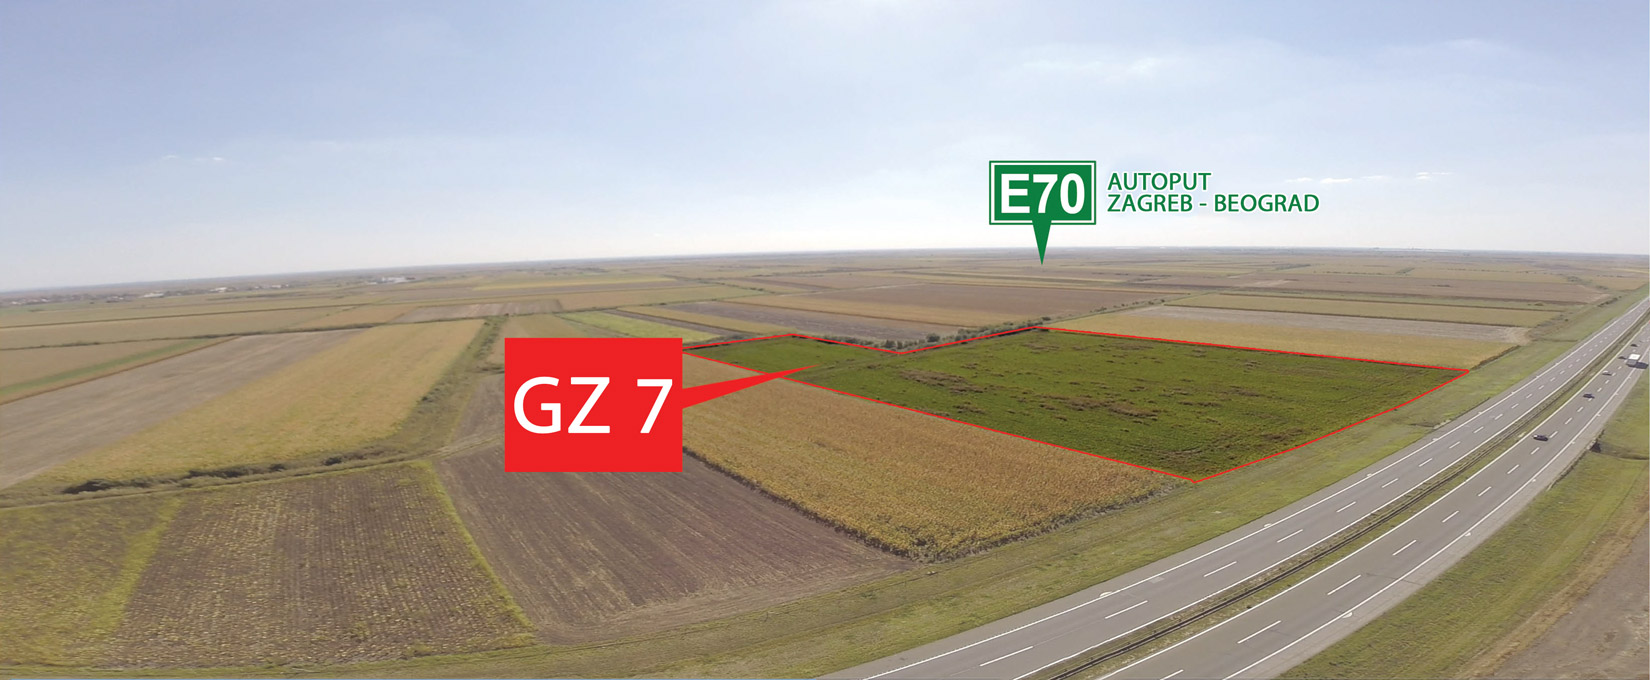 Građevinsko zemljište GZ7, prodaja zemljišta